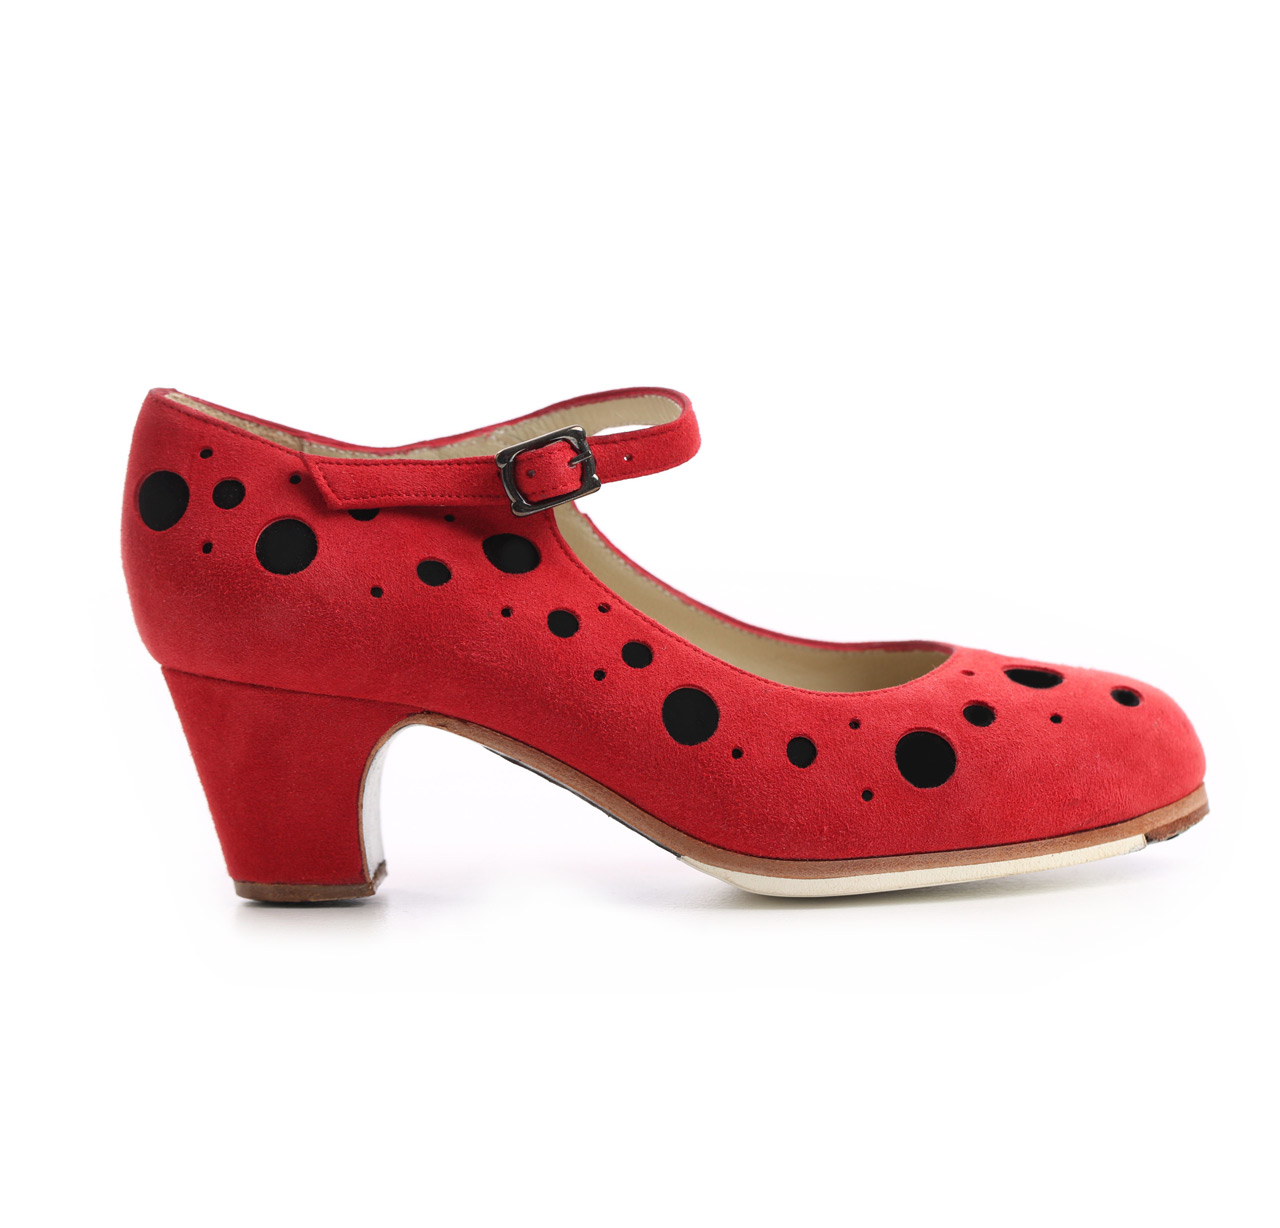 Chaussures Flamenco Topos Rouge-Noir